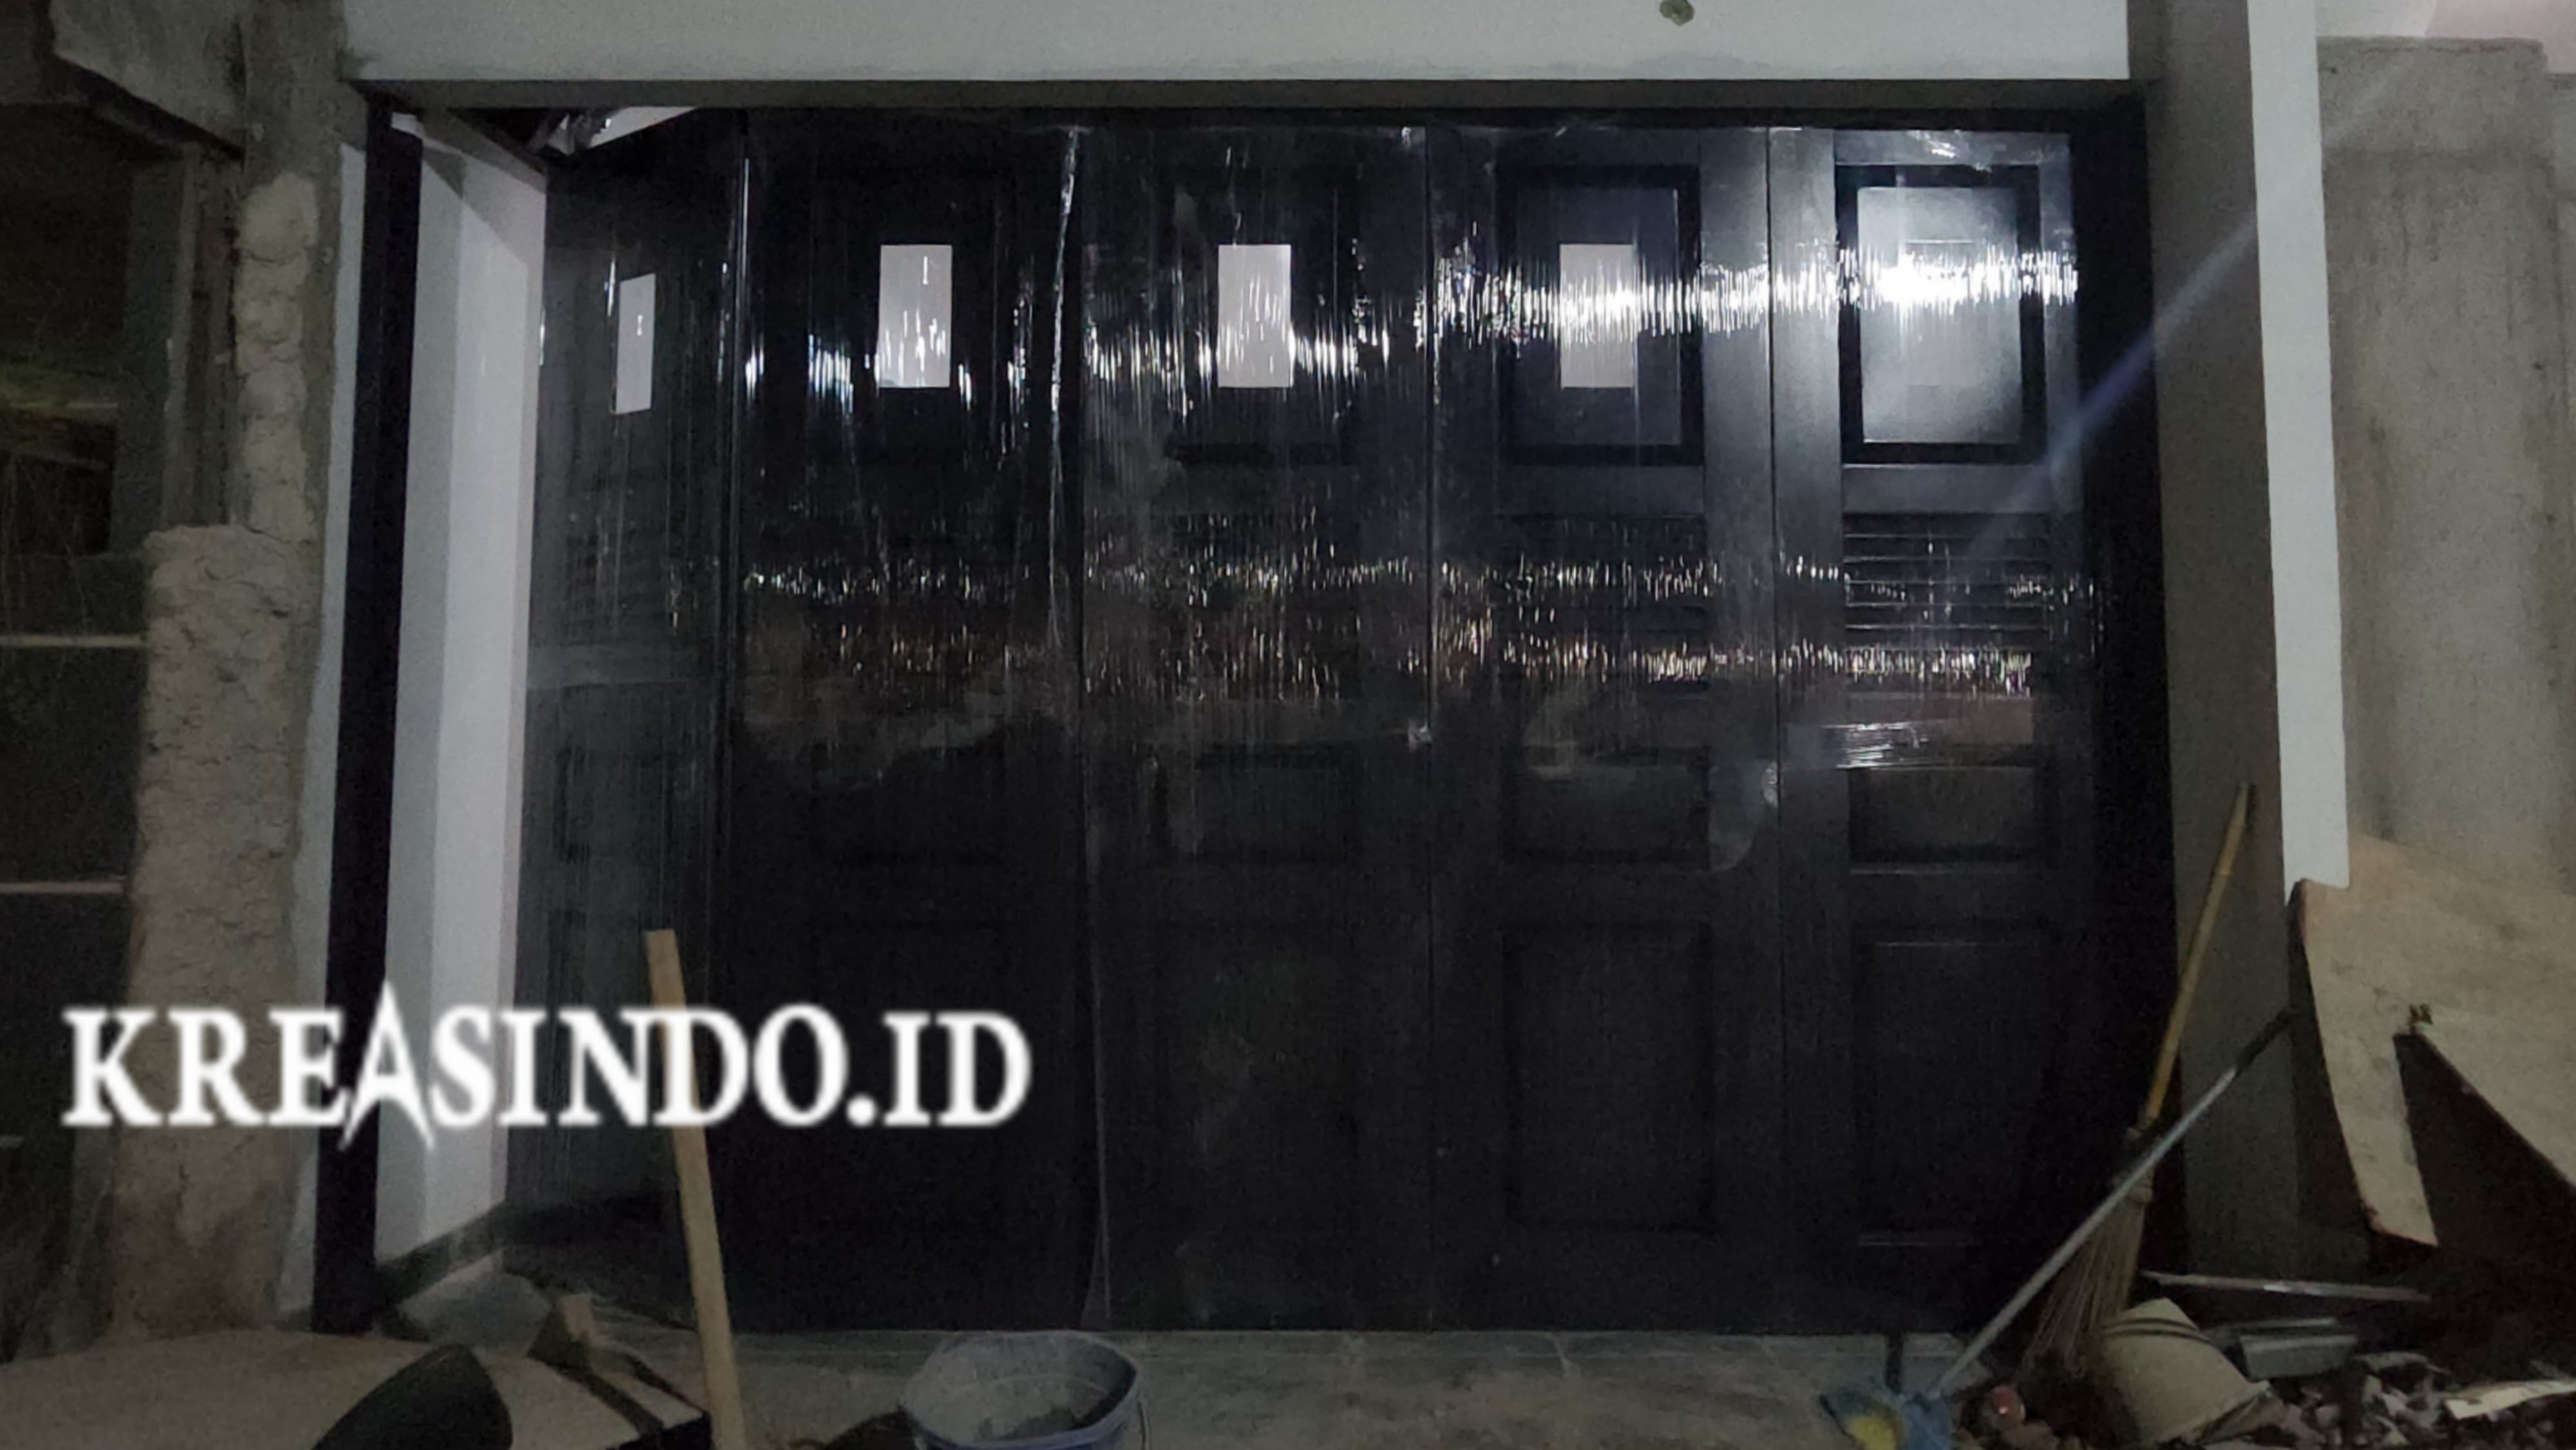 Pintu Garasi Besi pesanan Bpk Jazuli di Setu Bekasi Timur